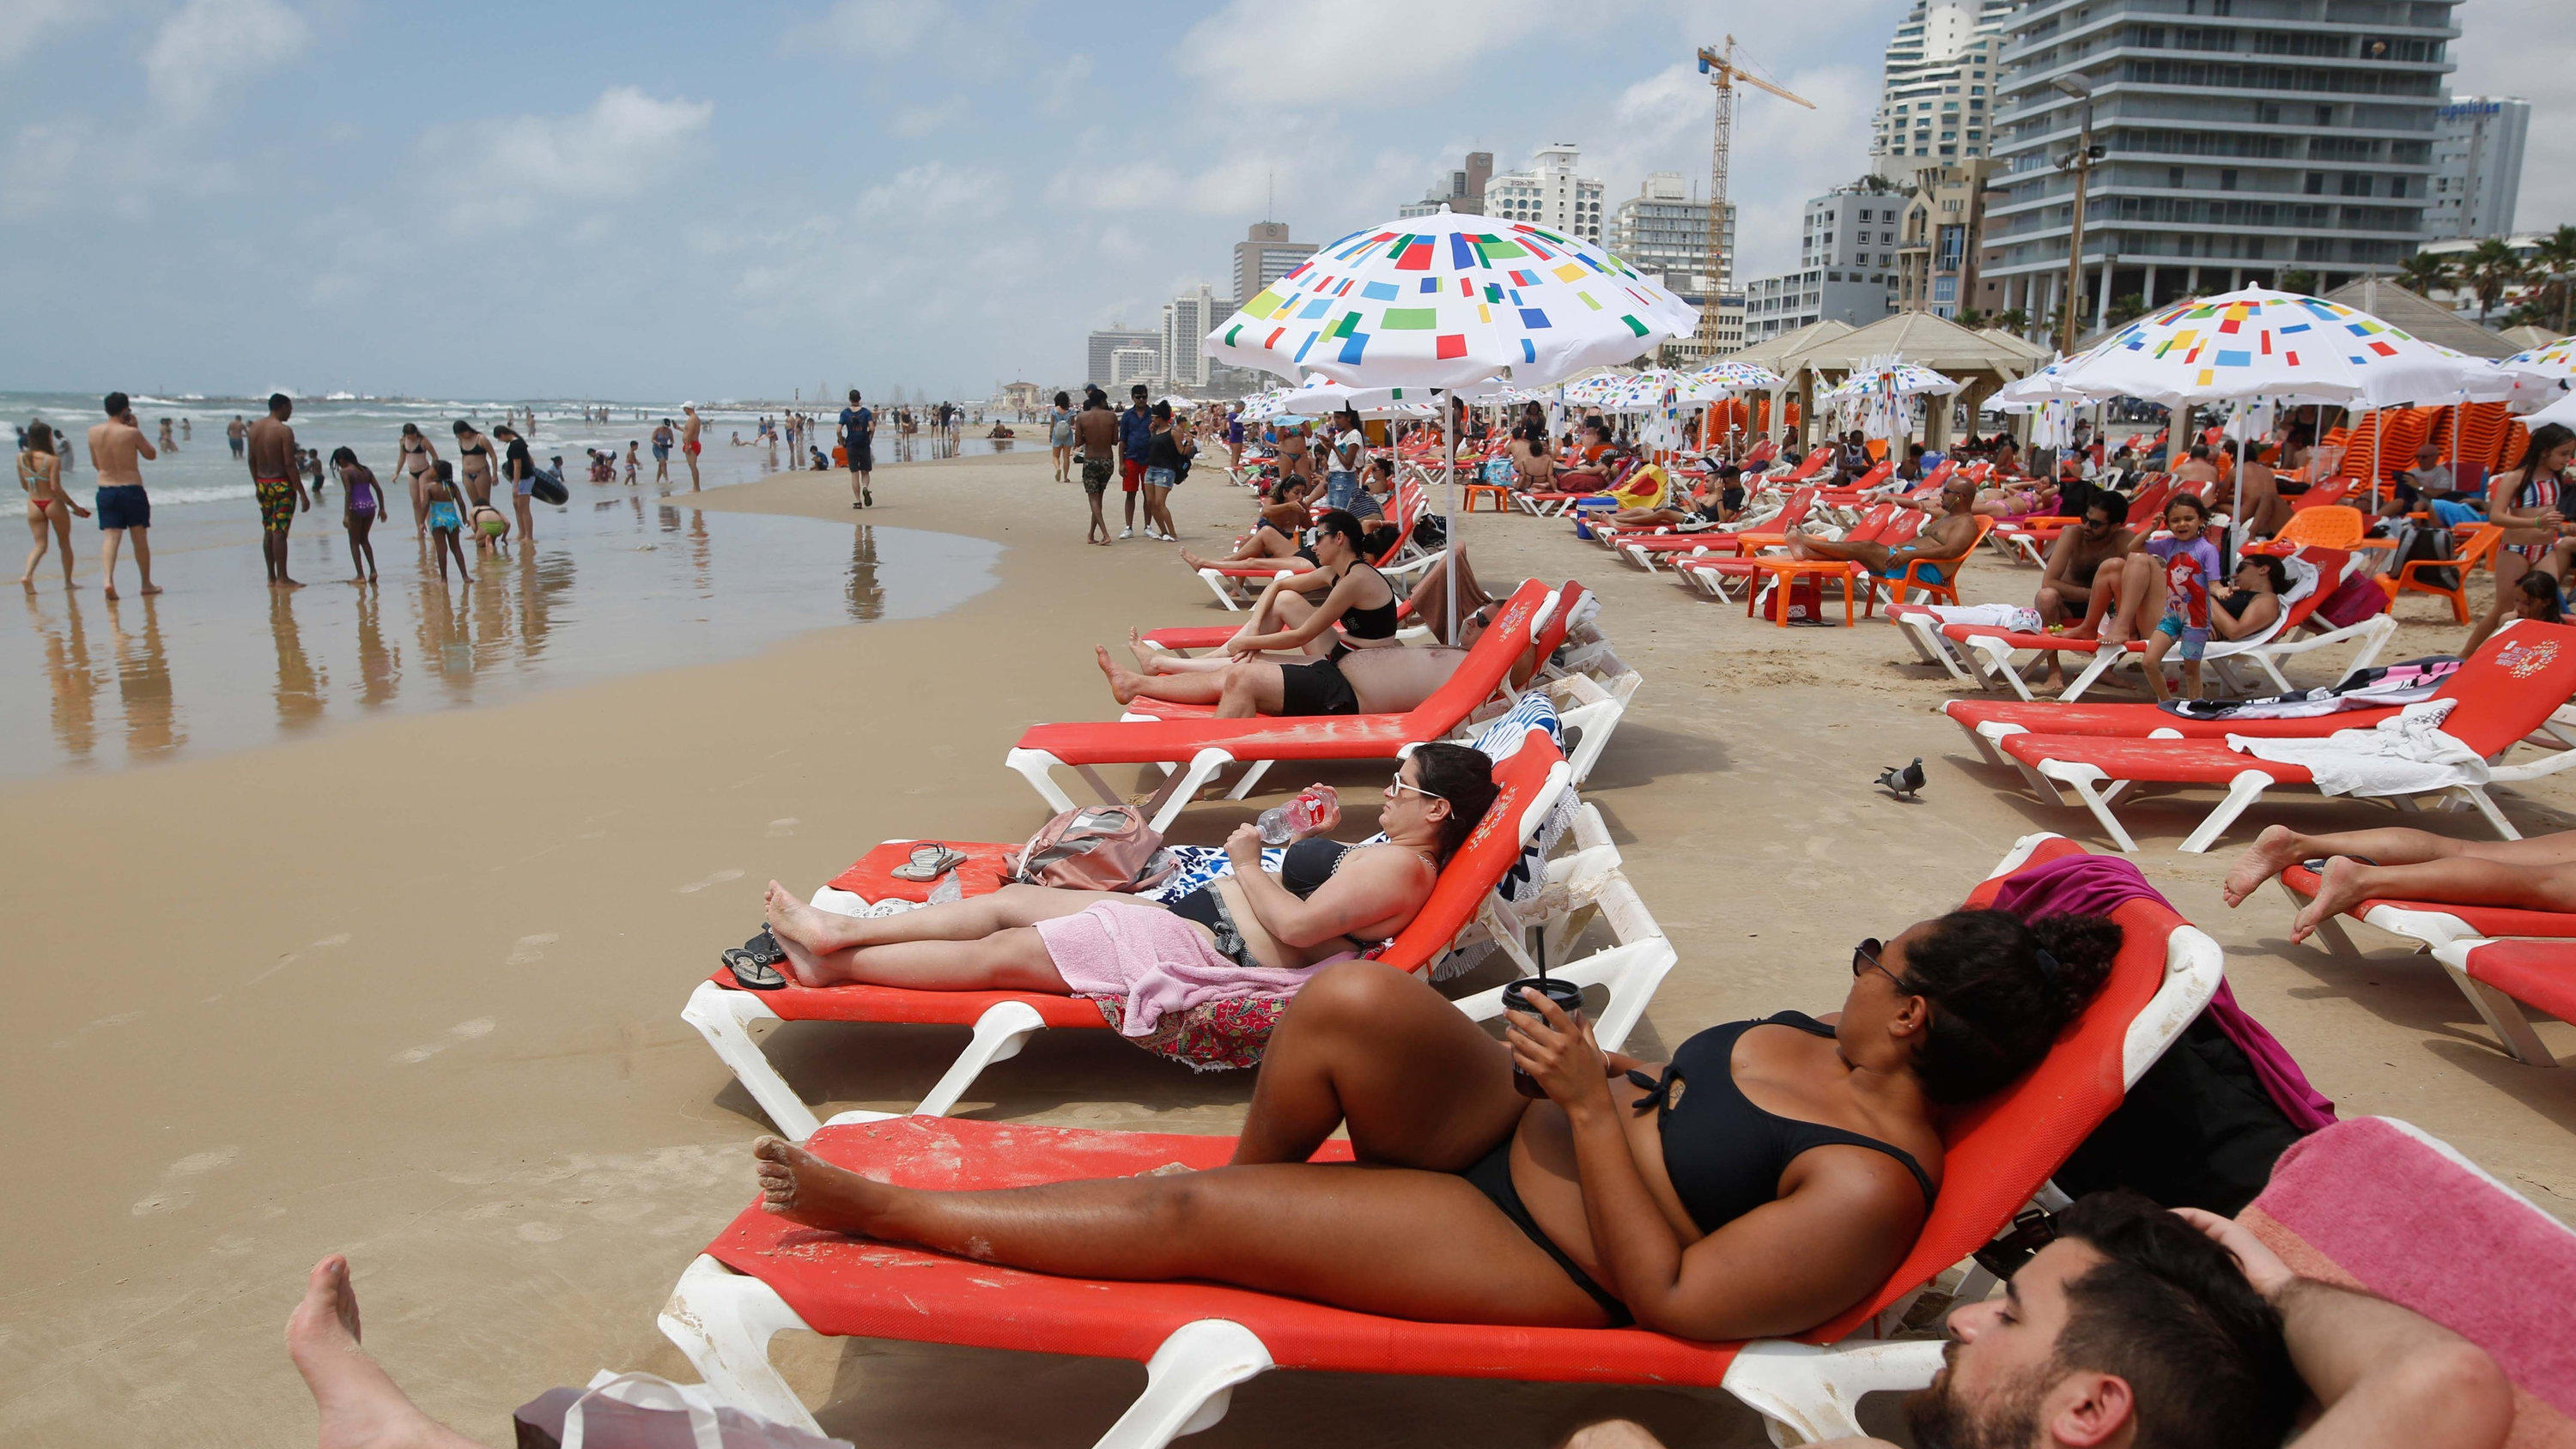 20.06.2020, Israel, Tel Aviv: Menschen genießen das warme Wetter an einem Strand. Foto: Gil Cohen Magen/Xinhua/dpa +++ dpa-Bildfunk +++